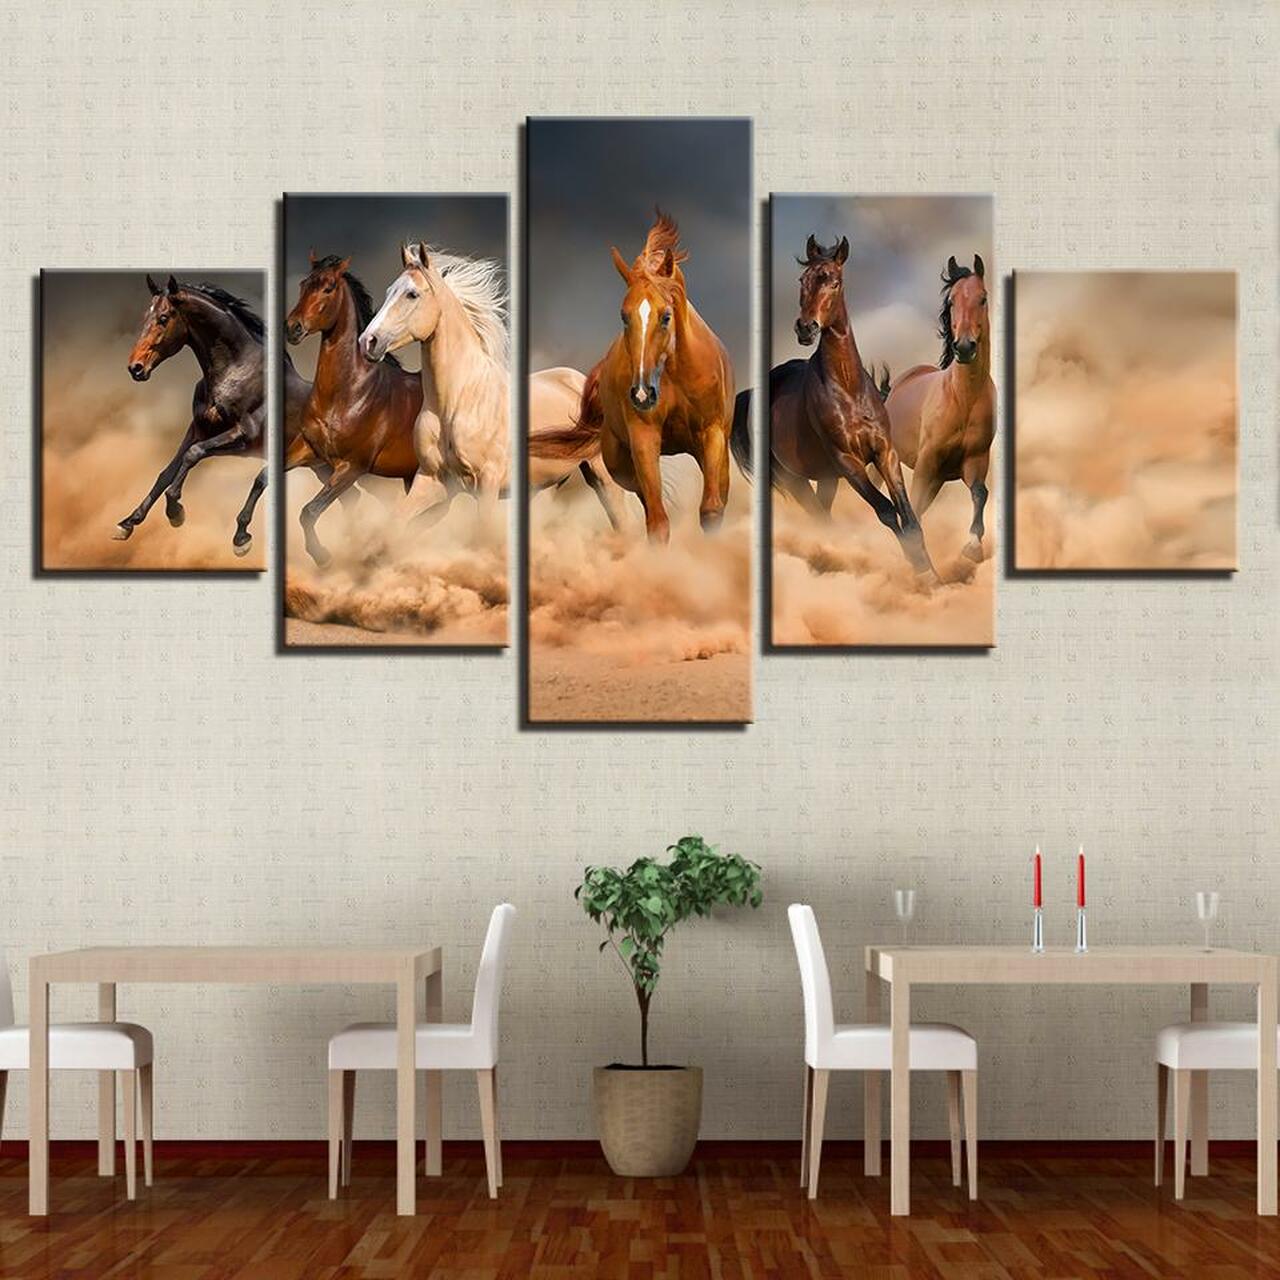 SIX HORSES 5 Piece Canvas Art Wall Decor